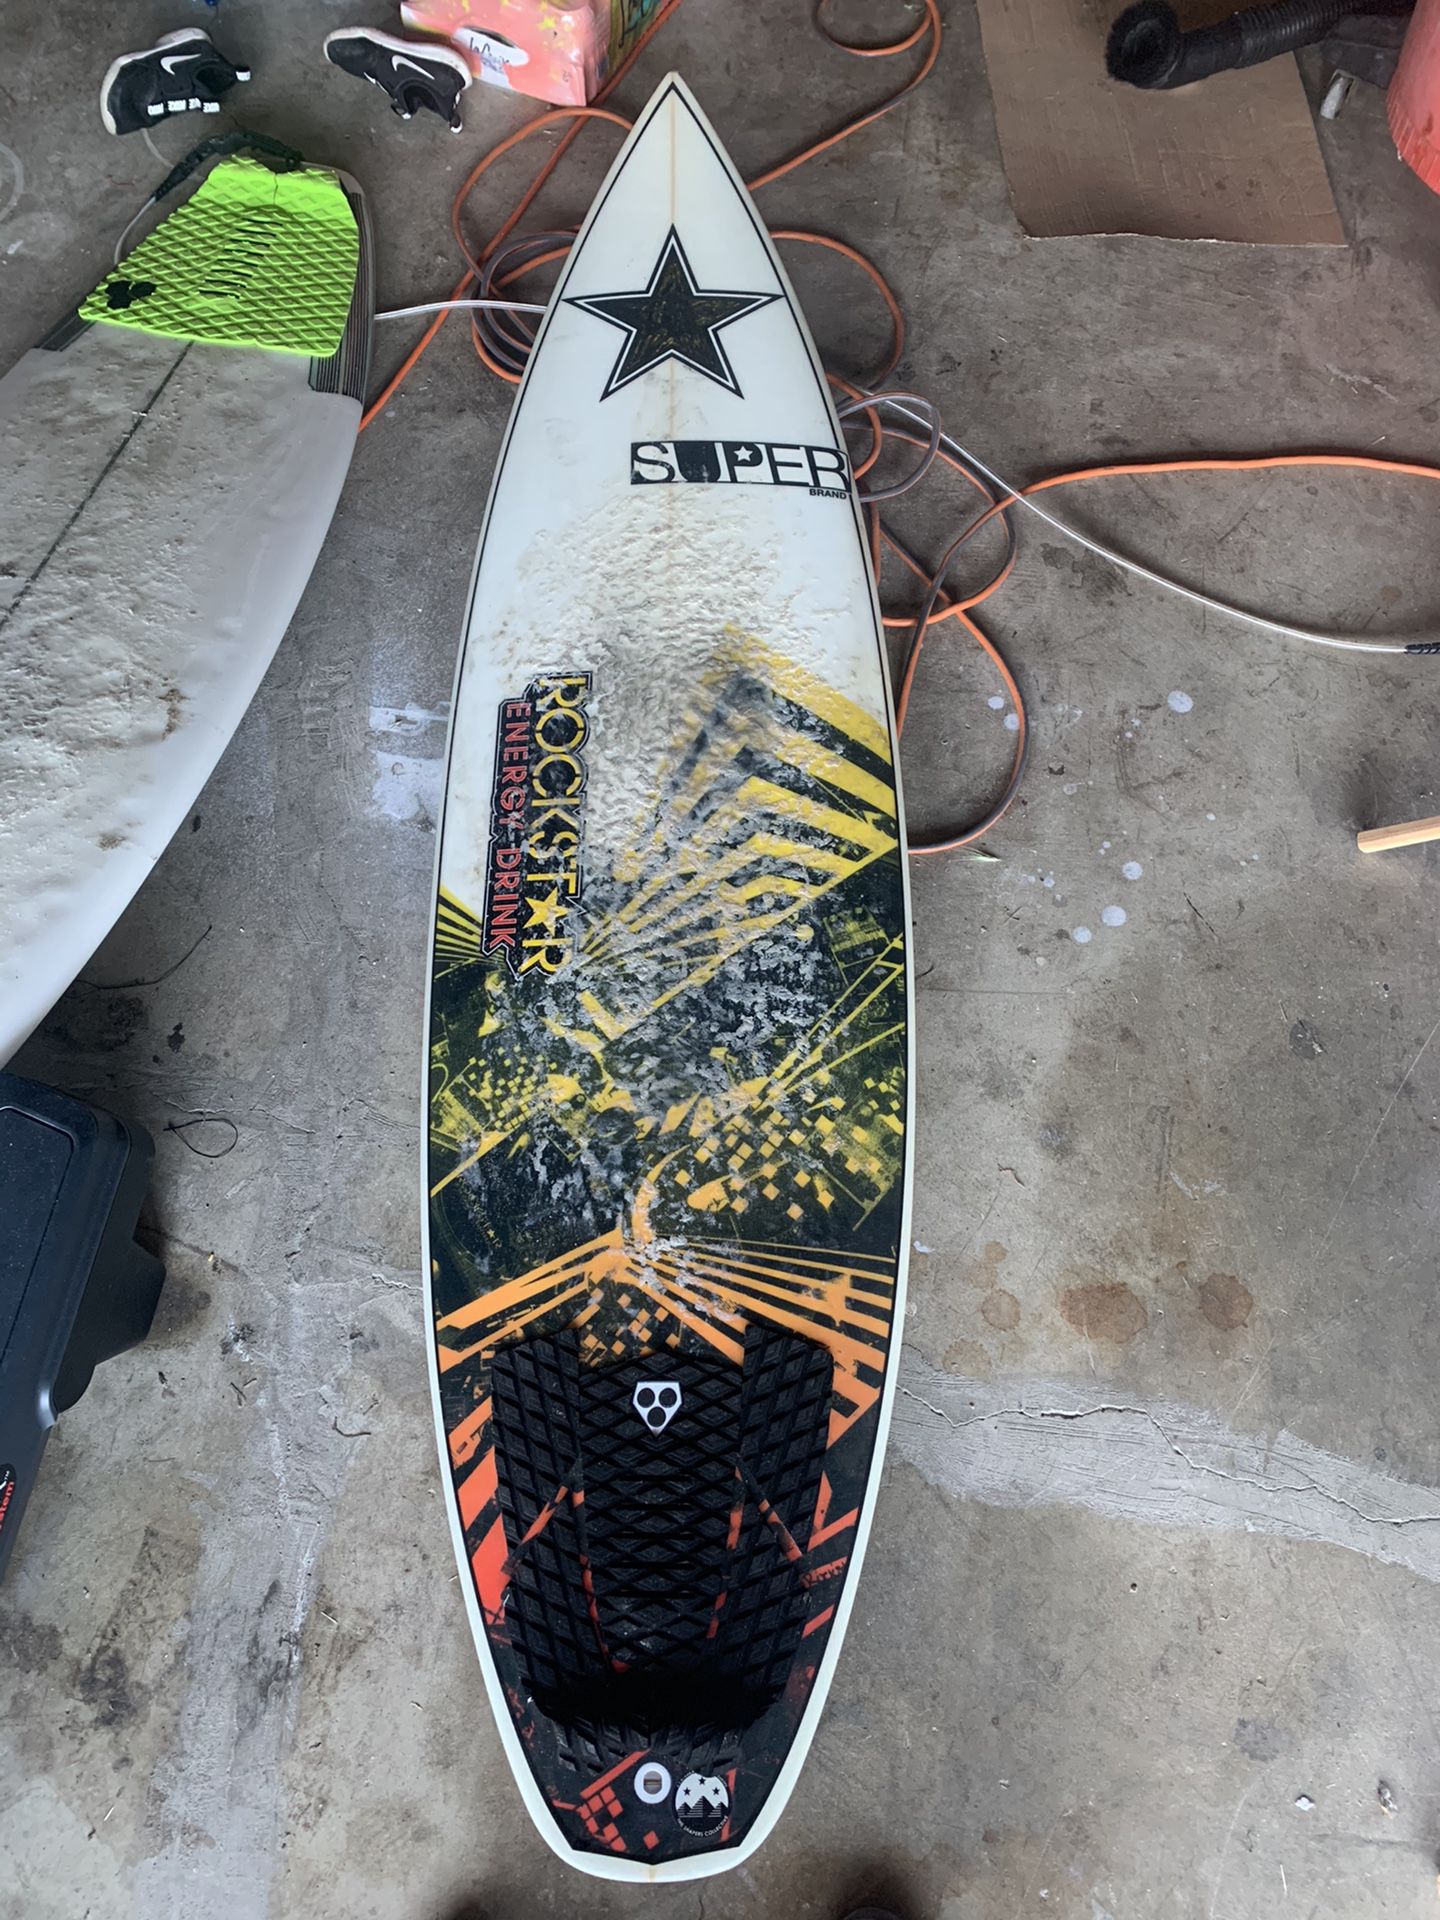 Super brand surfboard